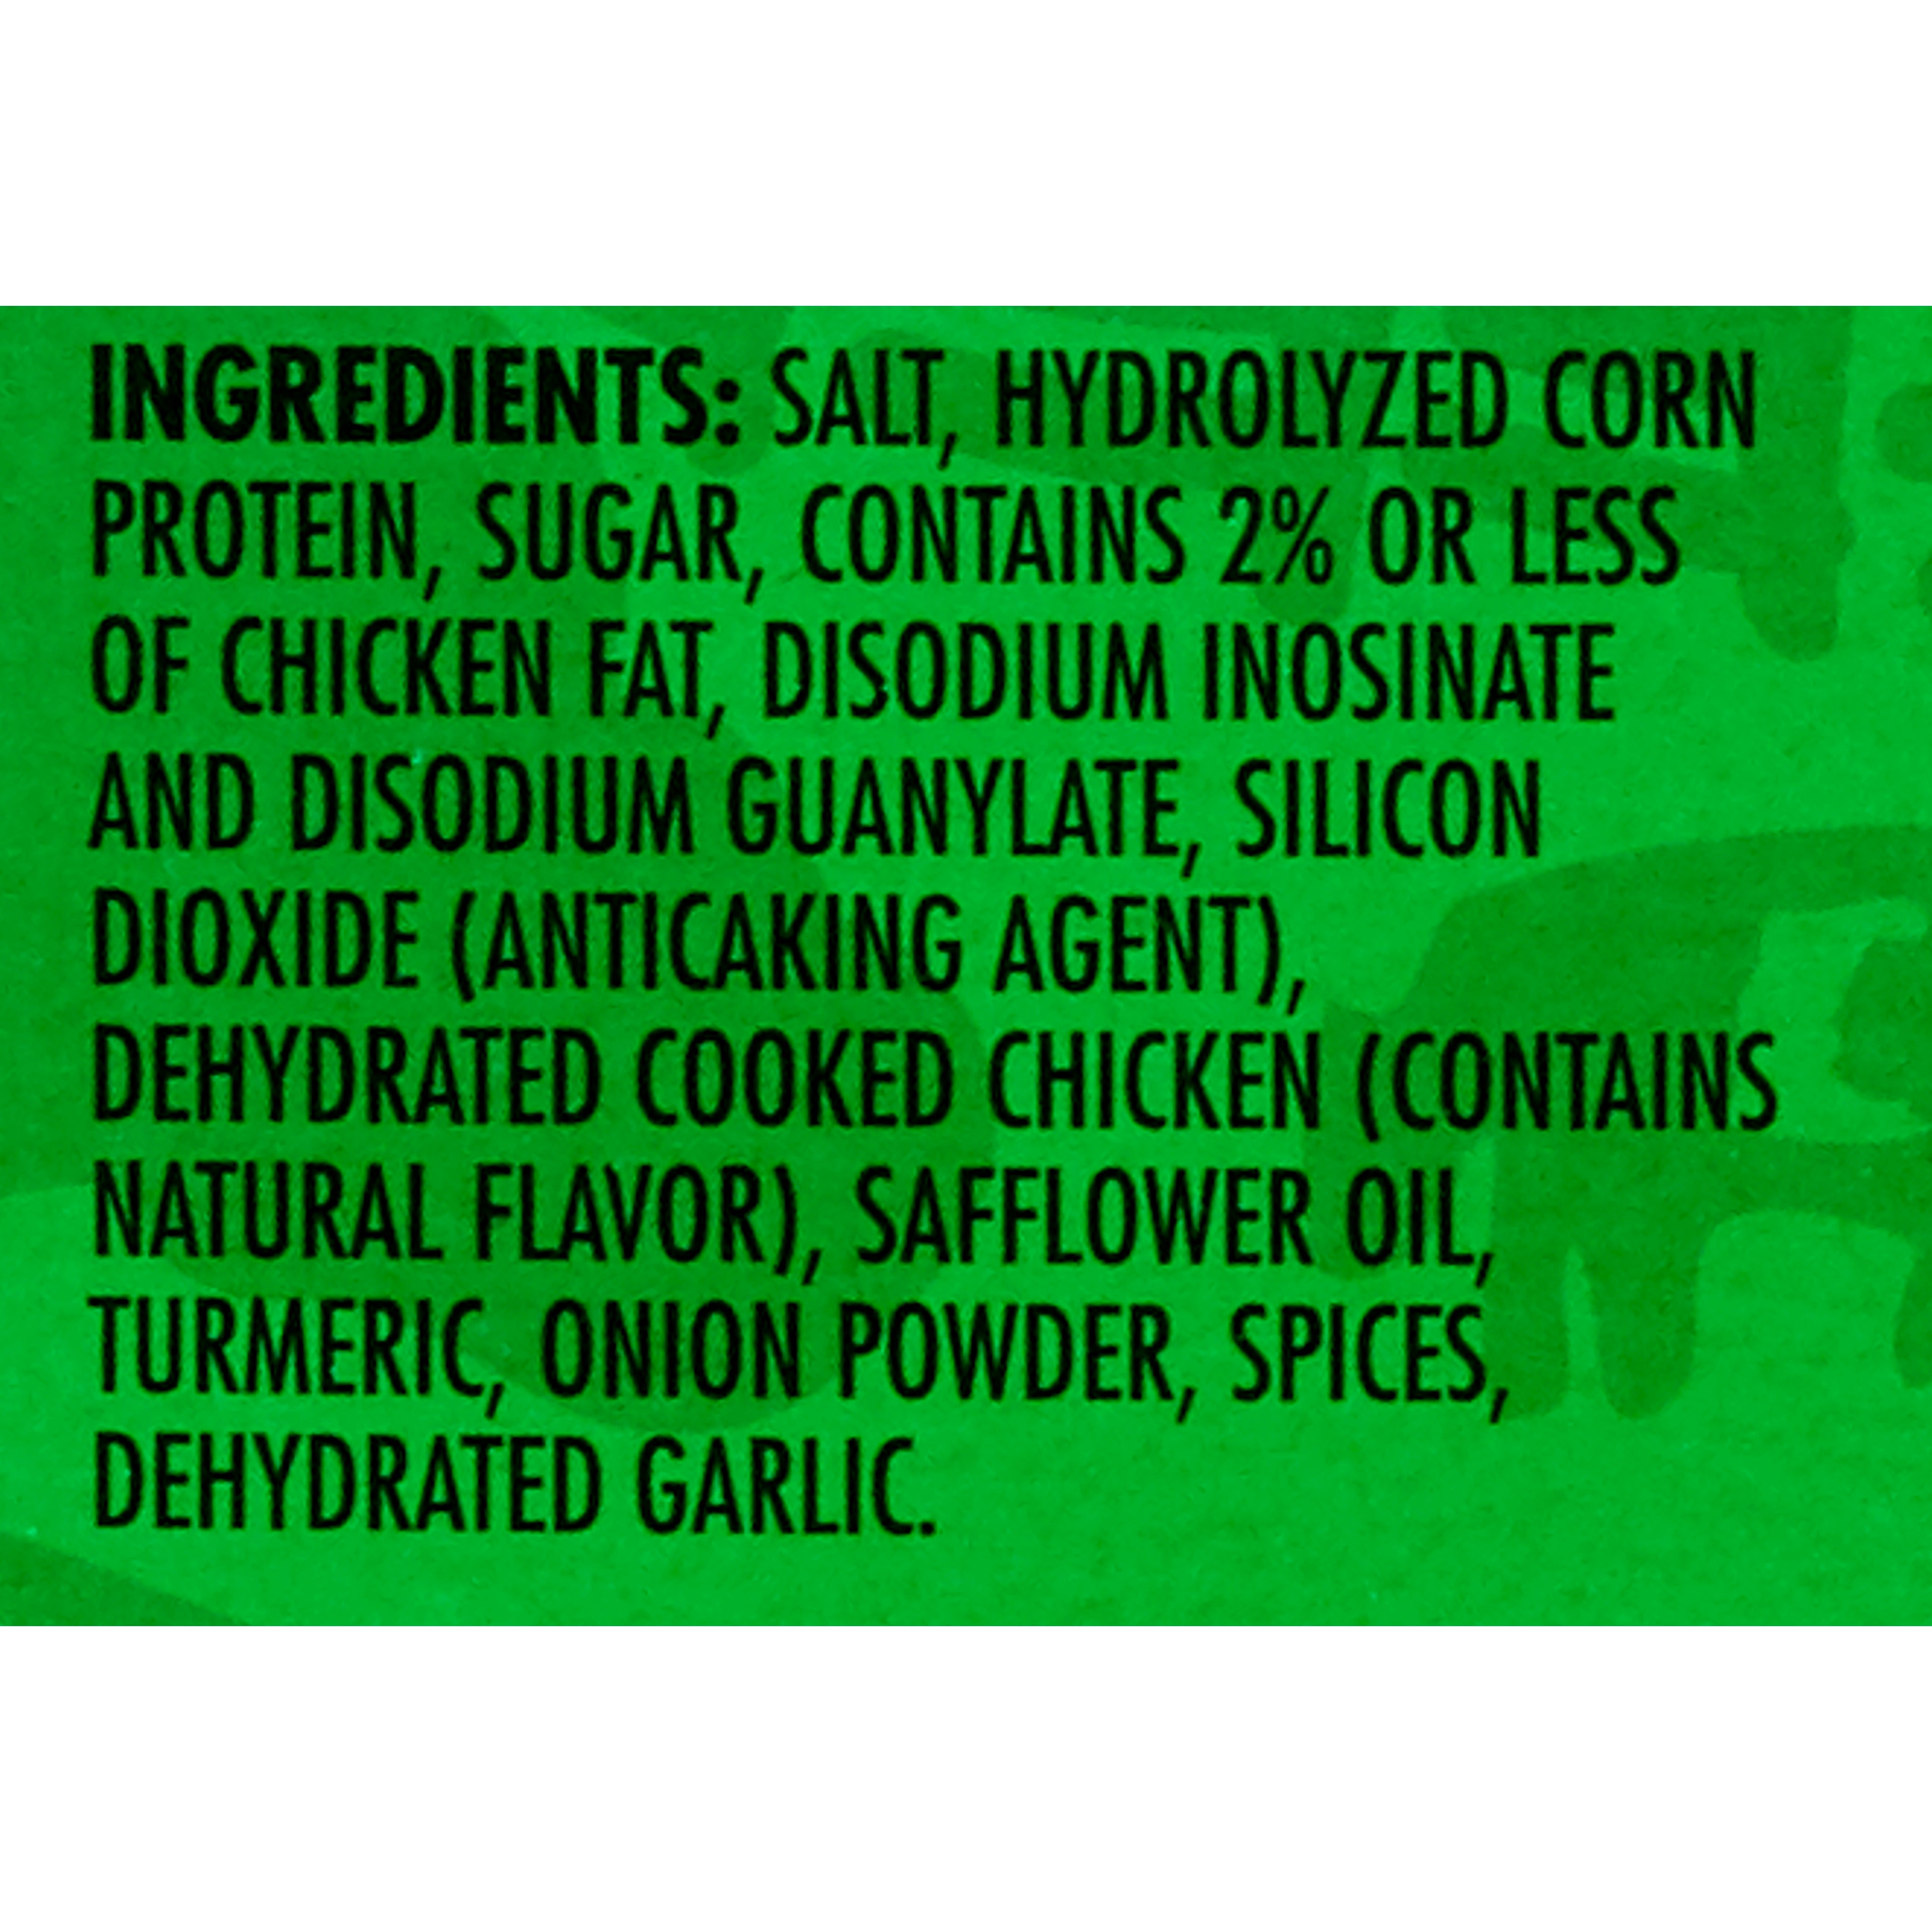 Instant Broth Herb-Ox Chicken Flavor Liquid 7.5 oz. Individual Packet